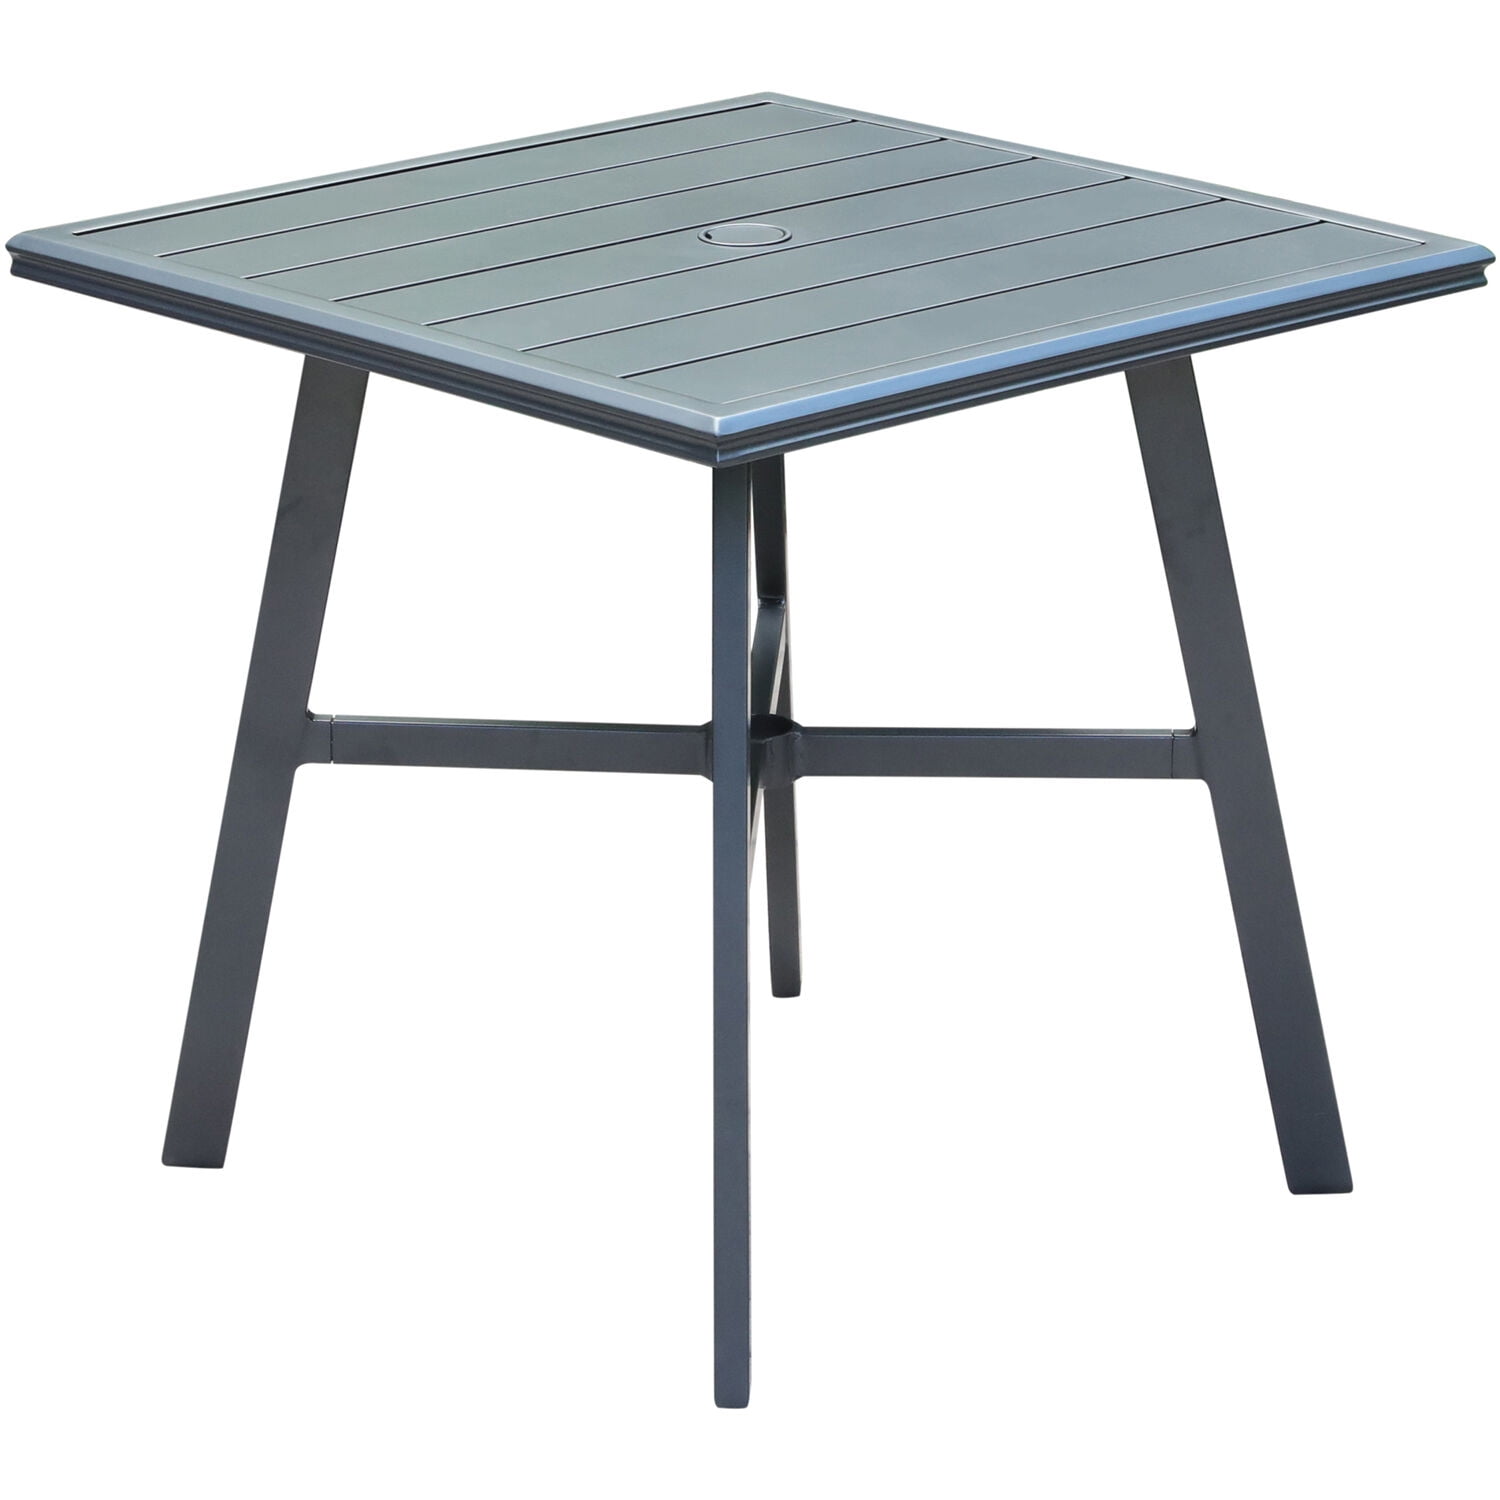 Hancmdntbl-30sl All-weather Commercial-grade Aluminum 30 In. Square Slat-top Bistro Table